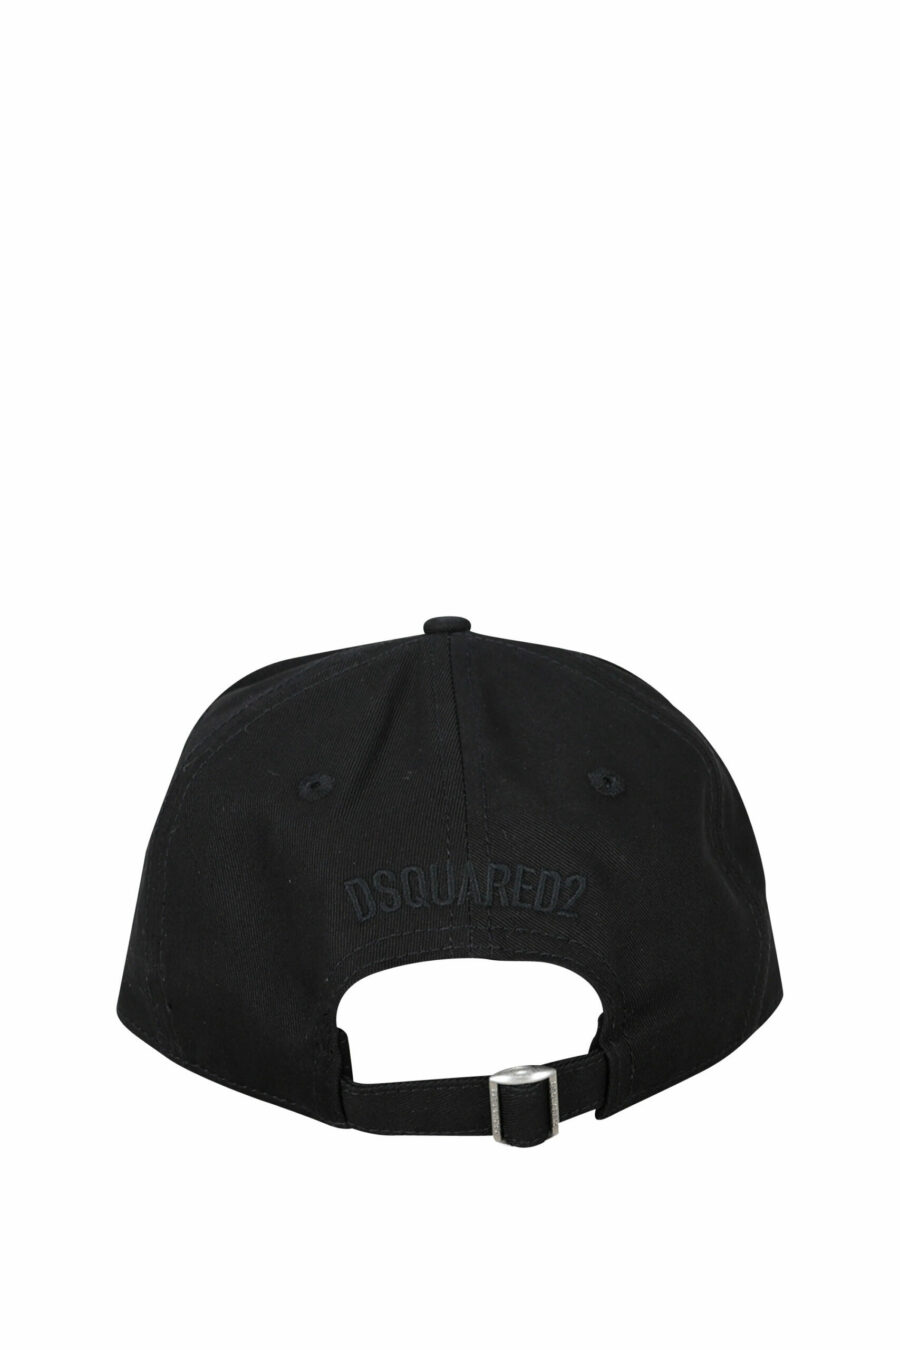 Black cap with "icon" logo - 8055777223000 1 scaled